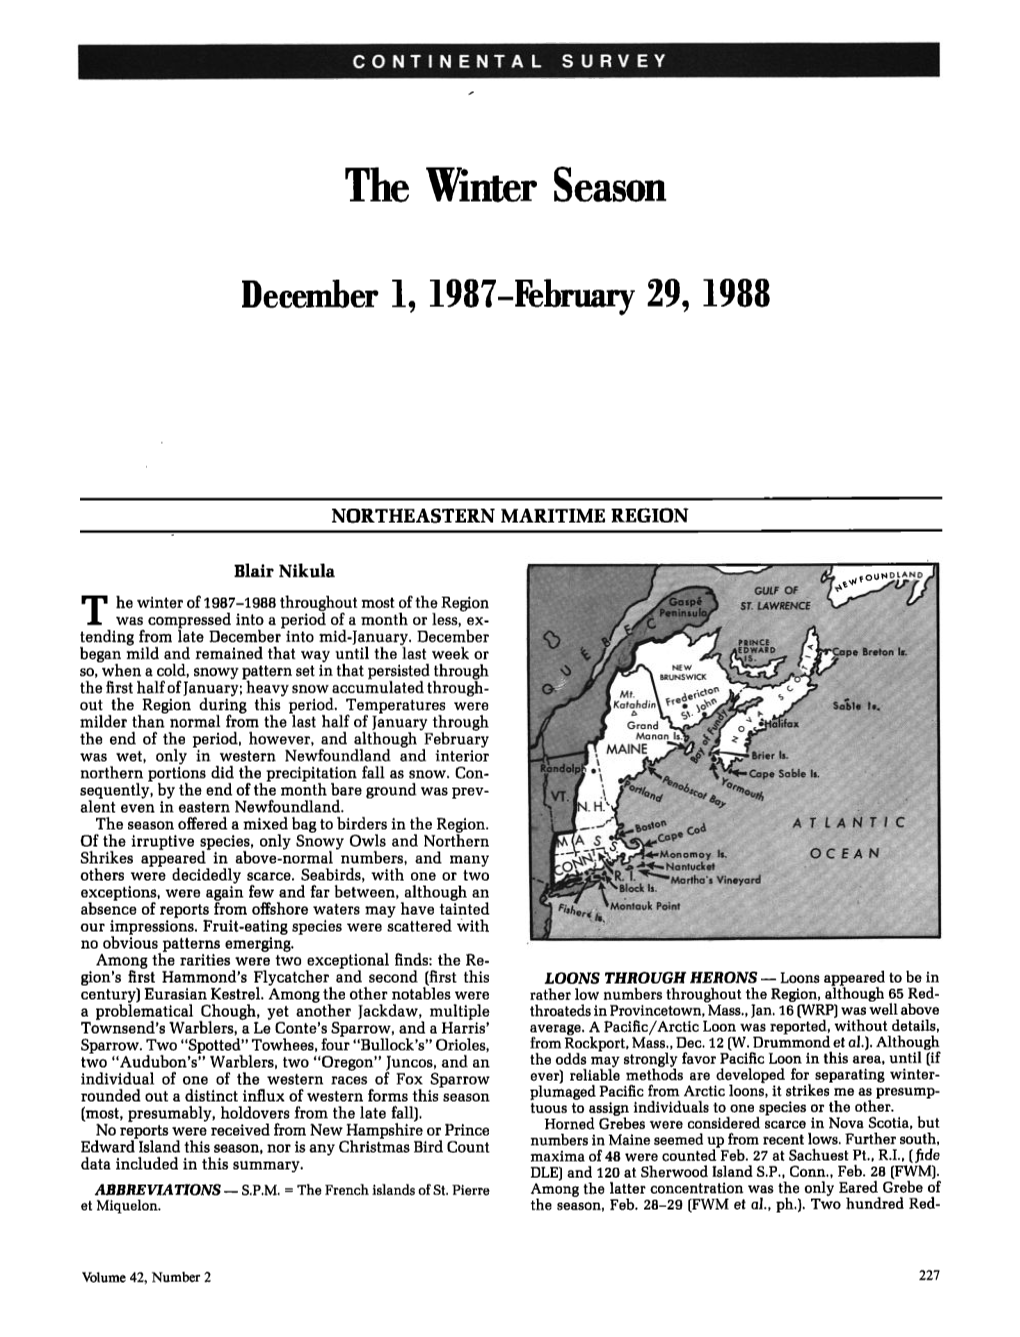 The Winter Season December 1, 1987-February 29, 1988